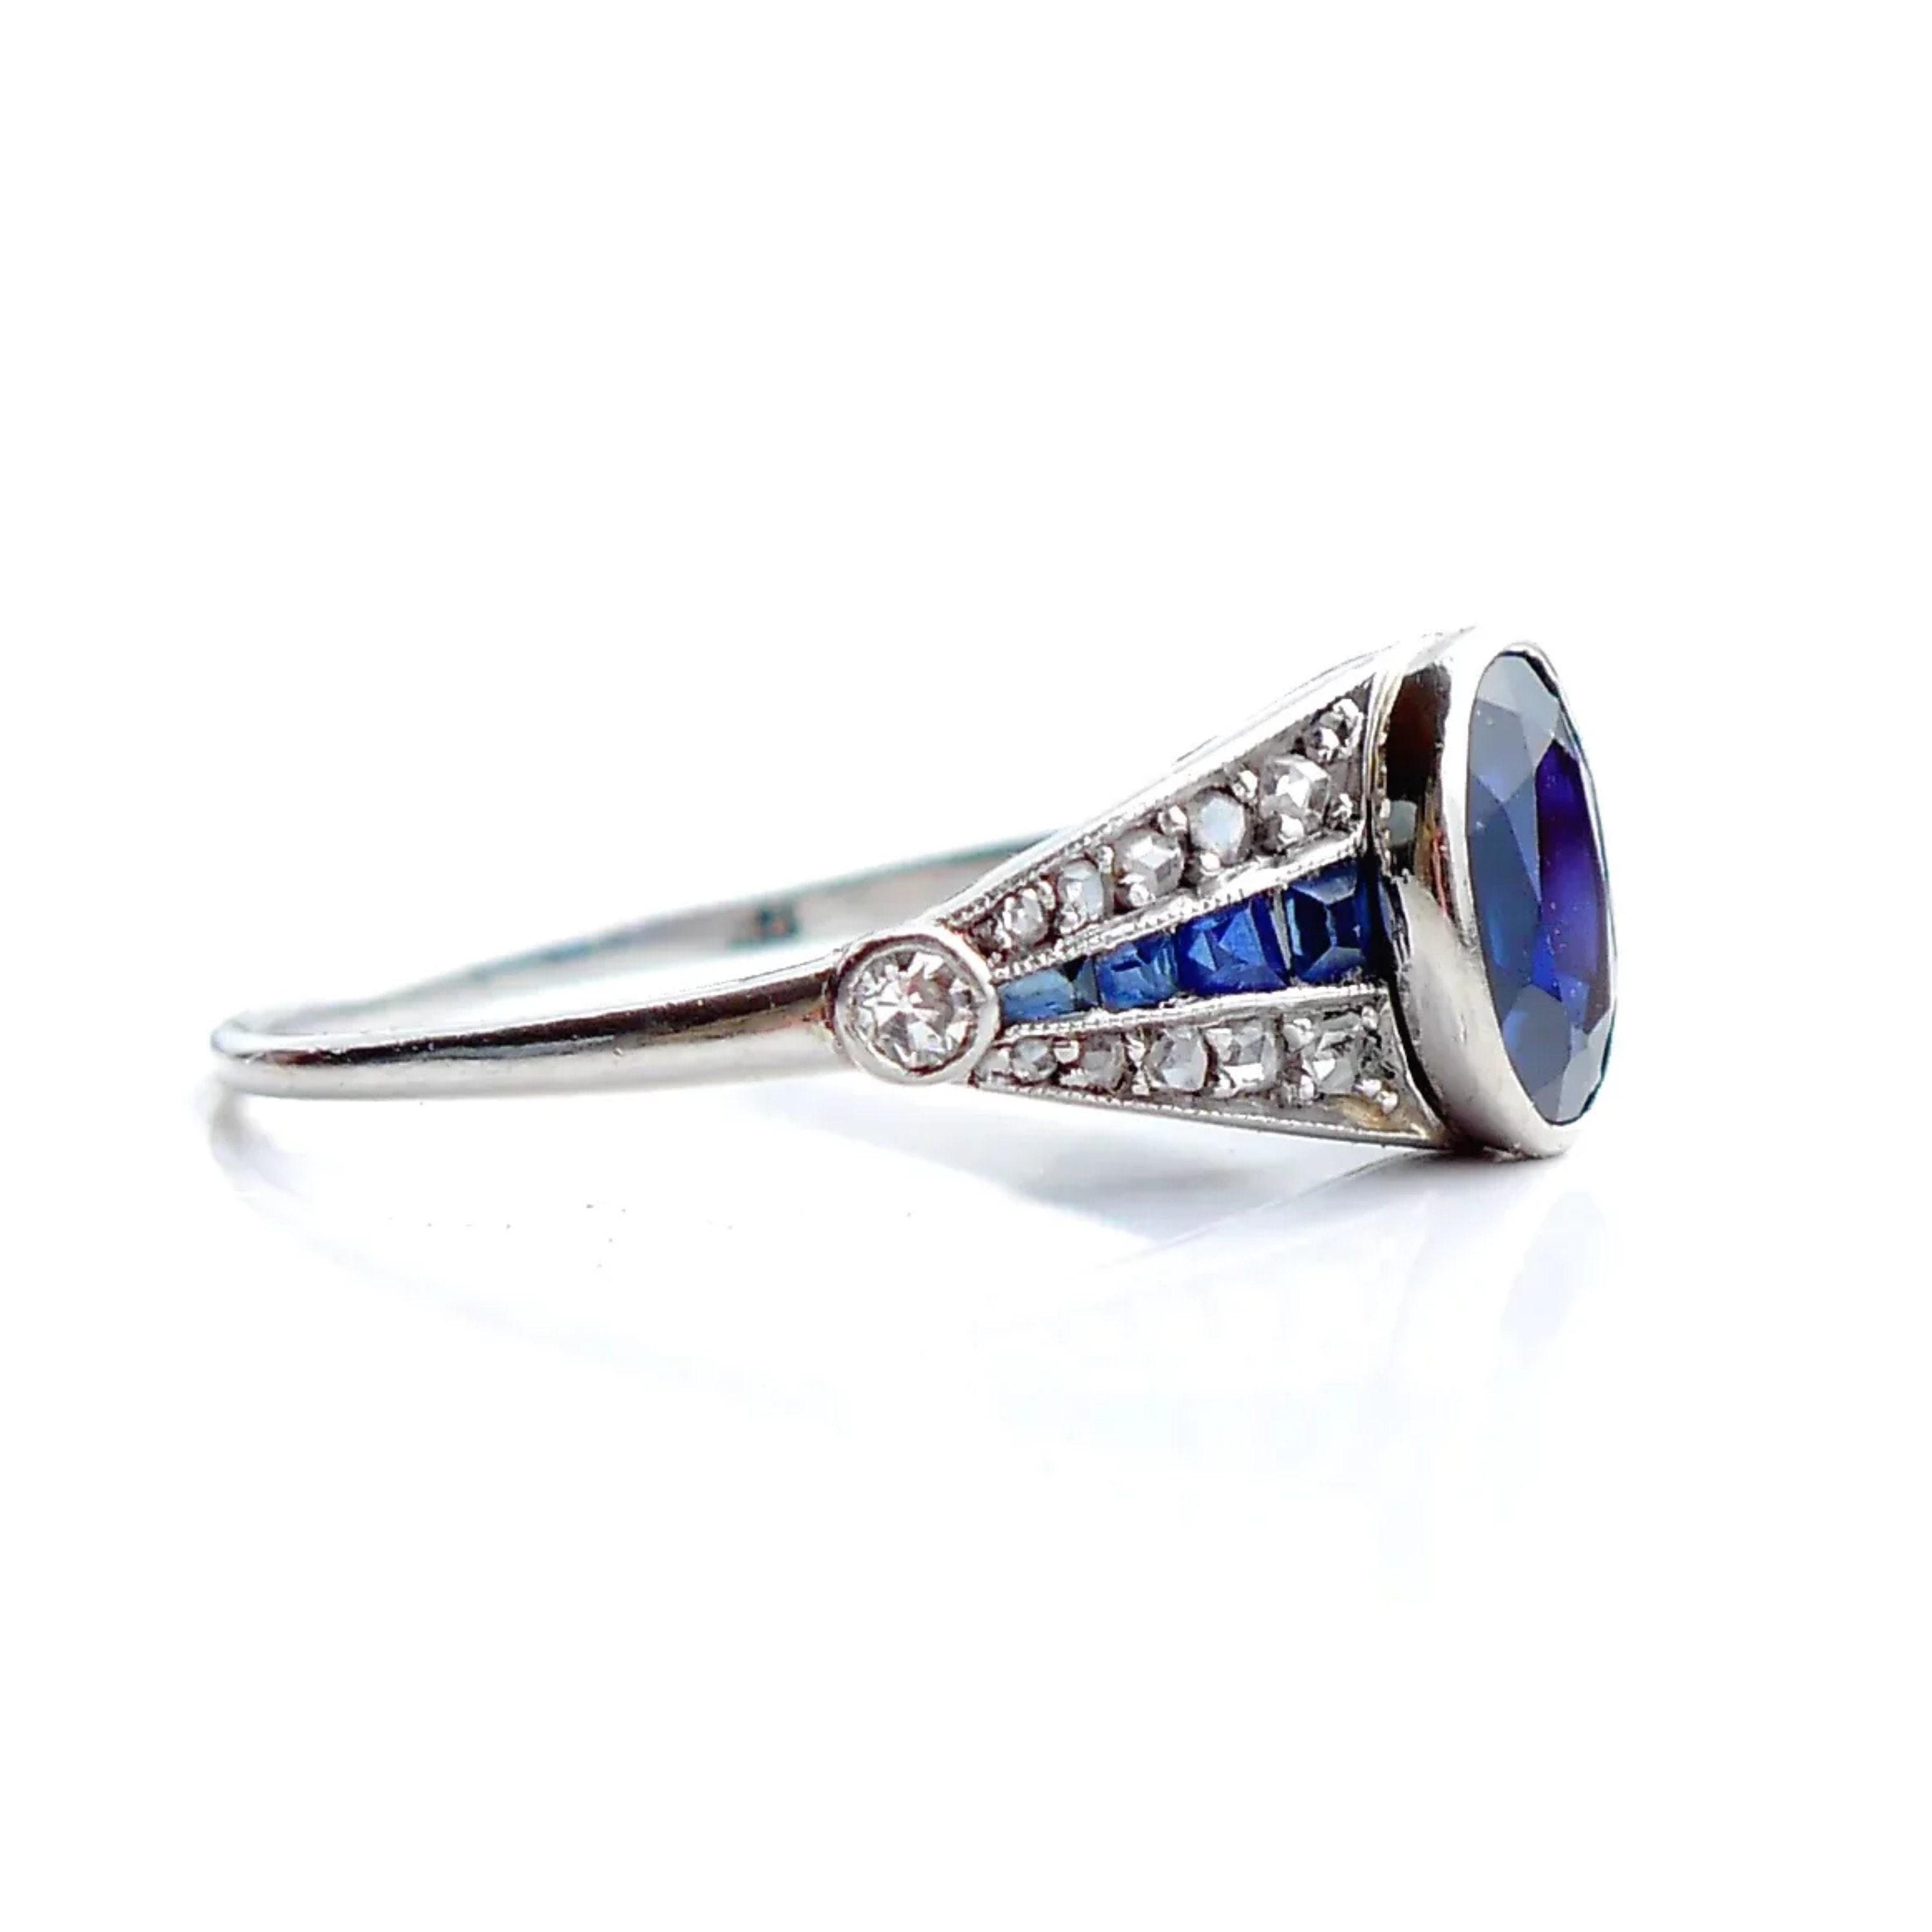 For Sale:  3 Carat Oval Cut Sapphire Engagement Ring Unique Diamond Half Eternity Band 2